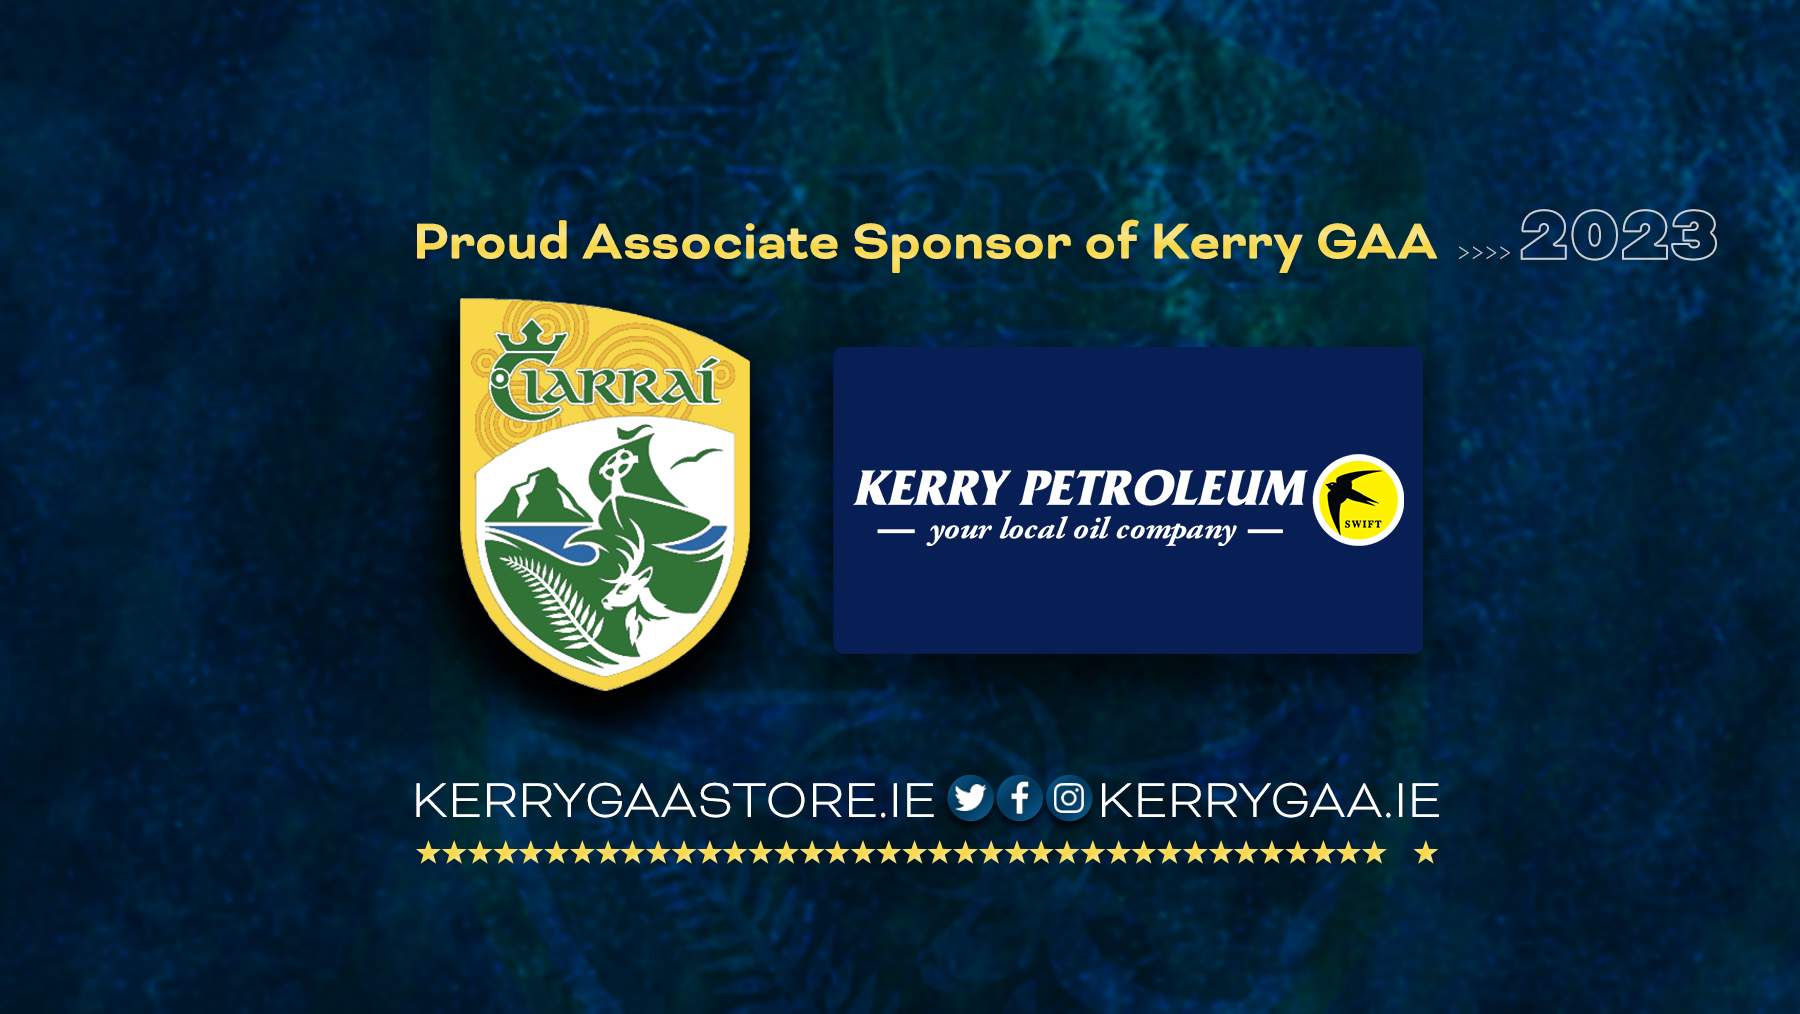 Kerry Petroleum Club Championship Round-Up